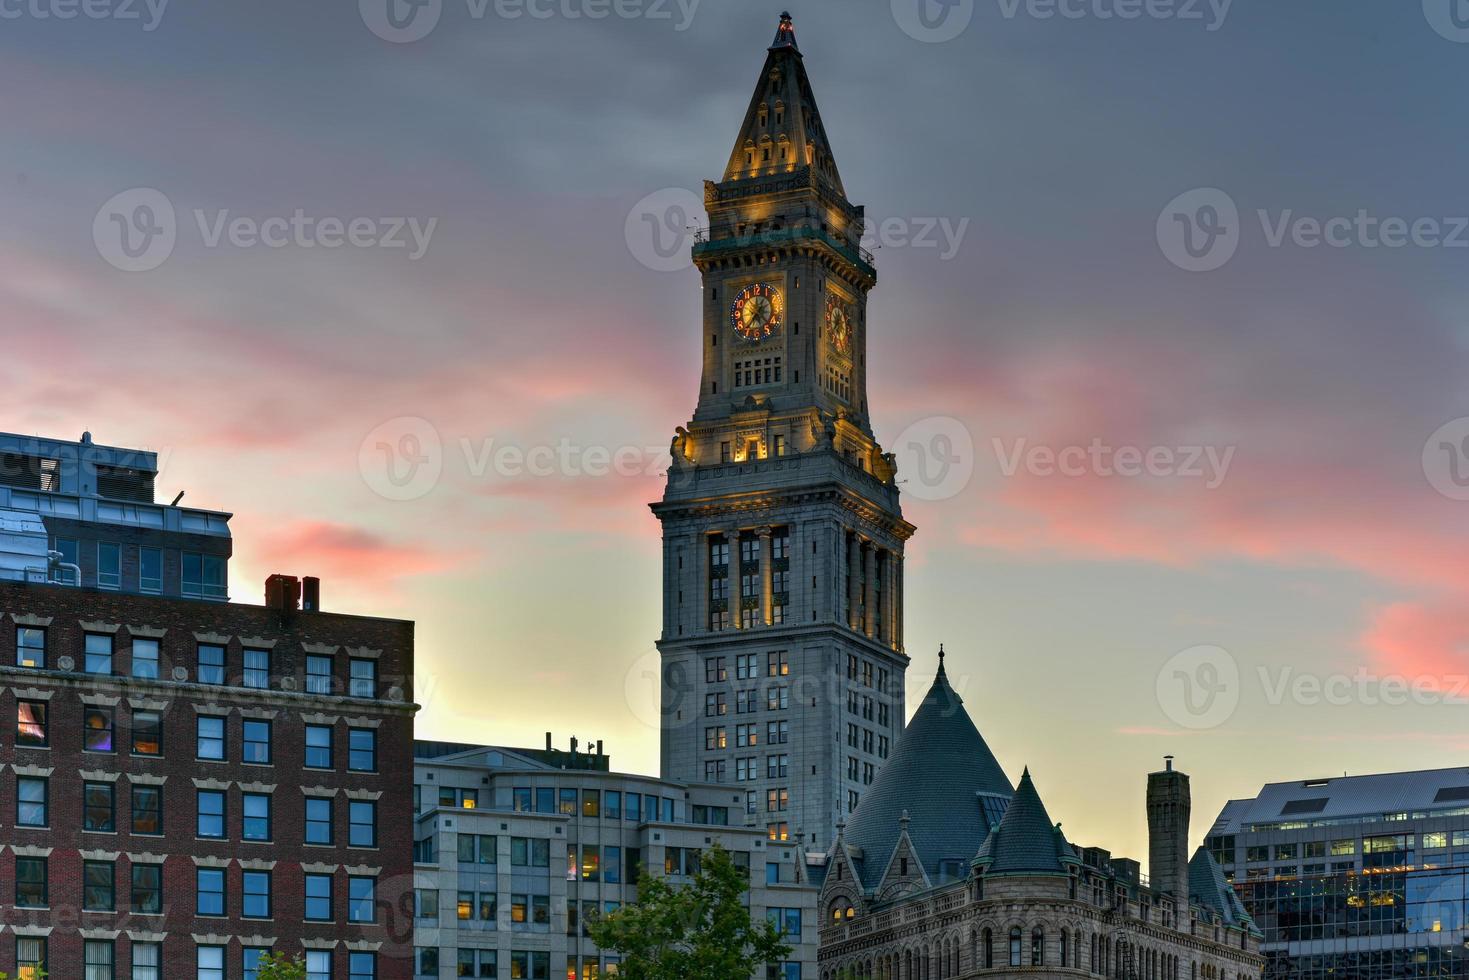 The Custom House Tower at sunset in Boston, Massachusetts. photo